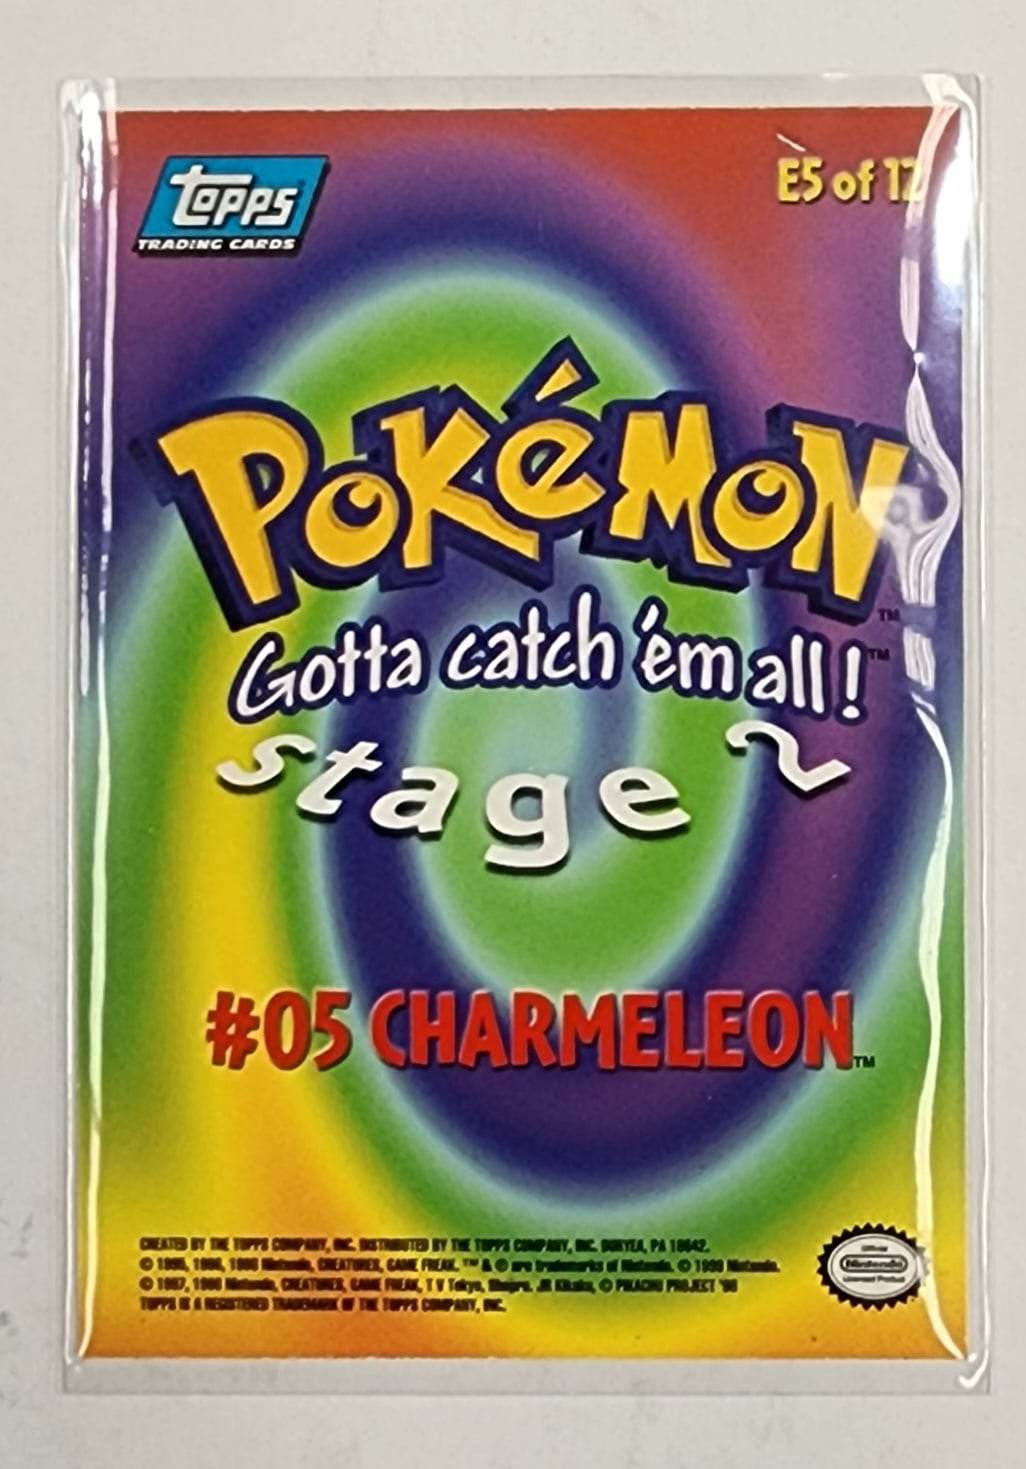 1999 Topps Pokemon Card Movie Edition Charmeleon - E5 - #05